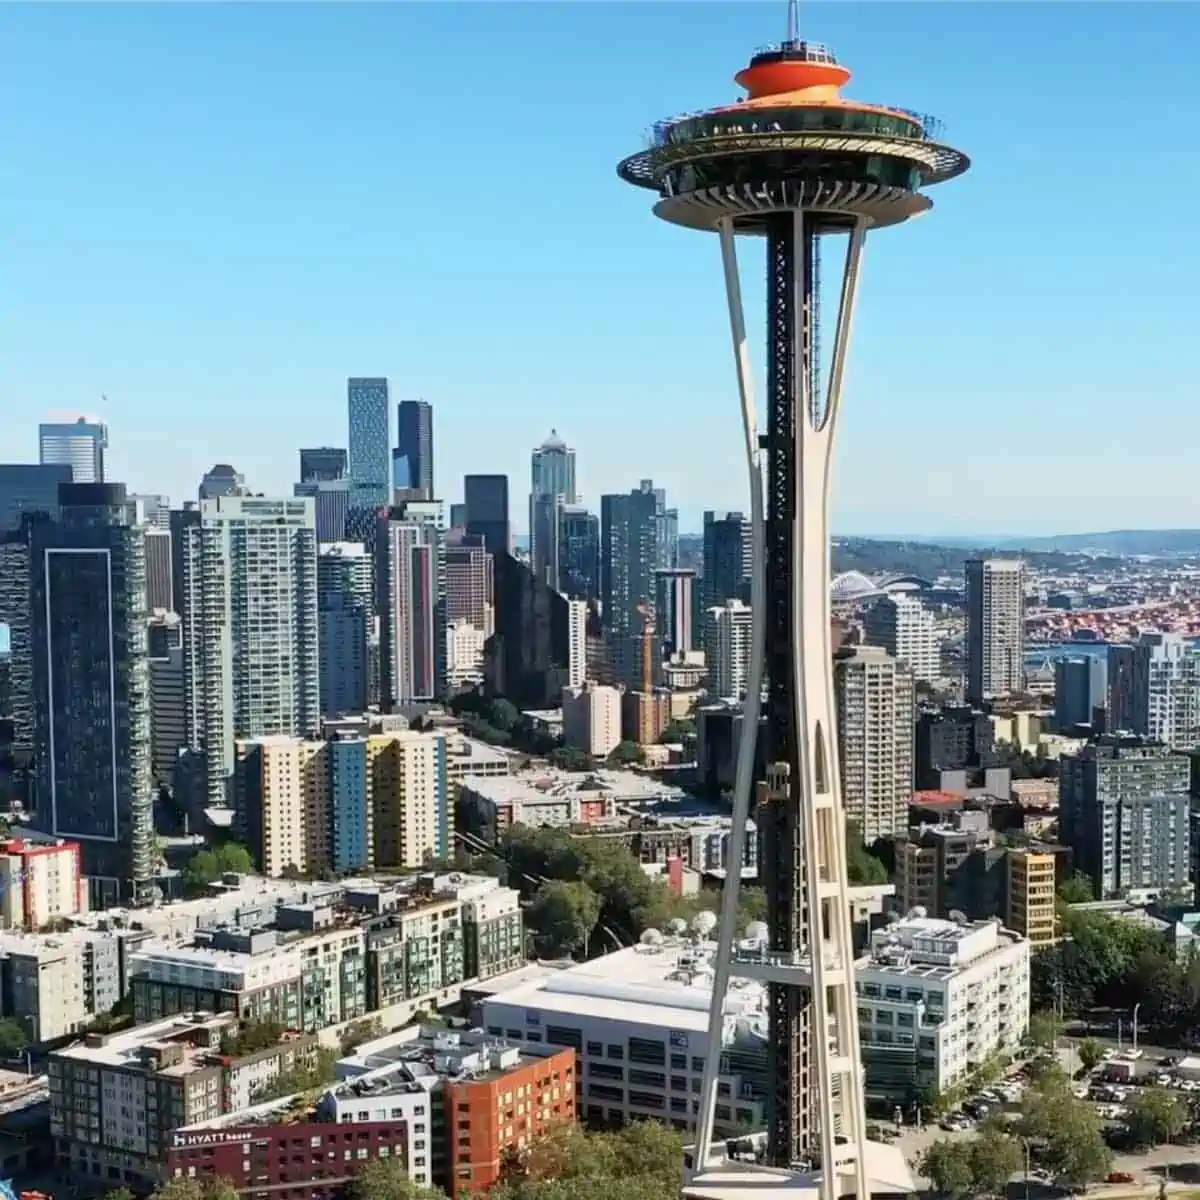 Seattle Washington city photo with tower and vegan restaurants.